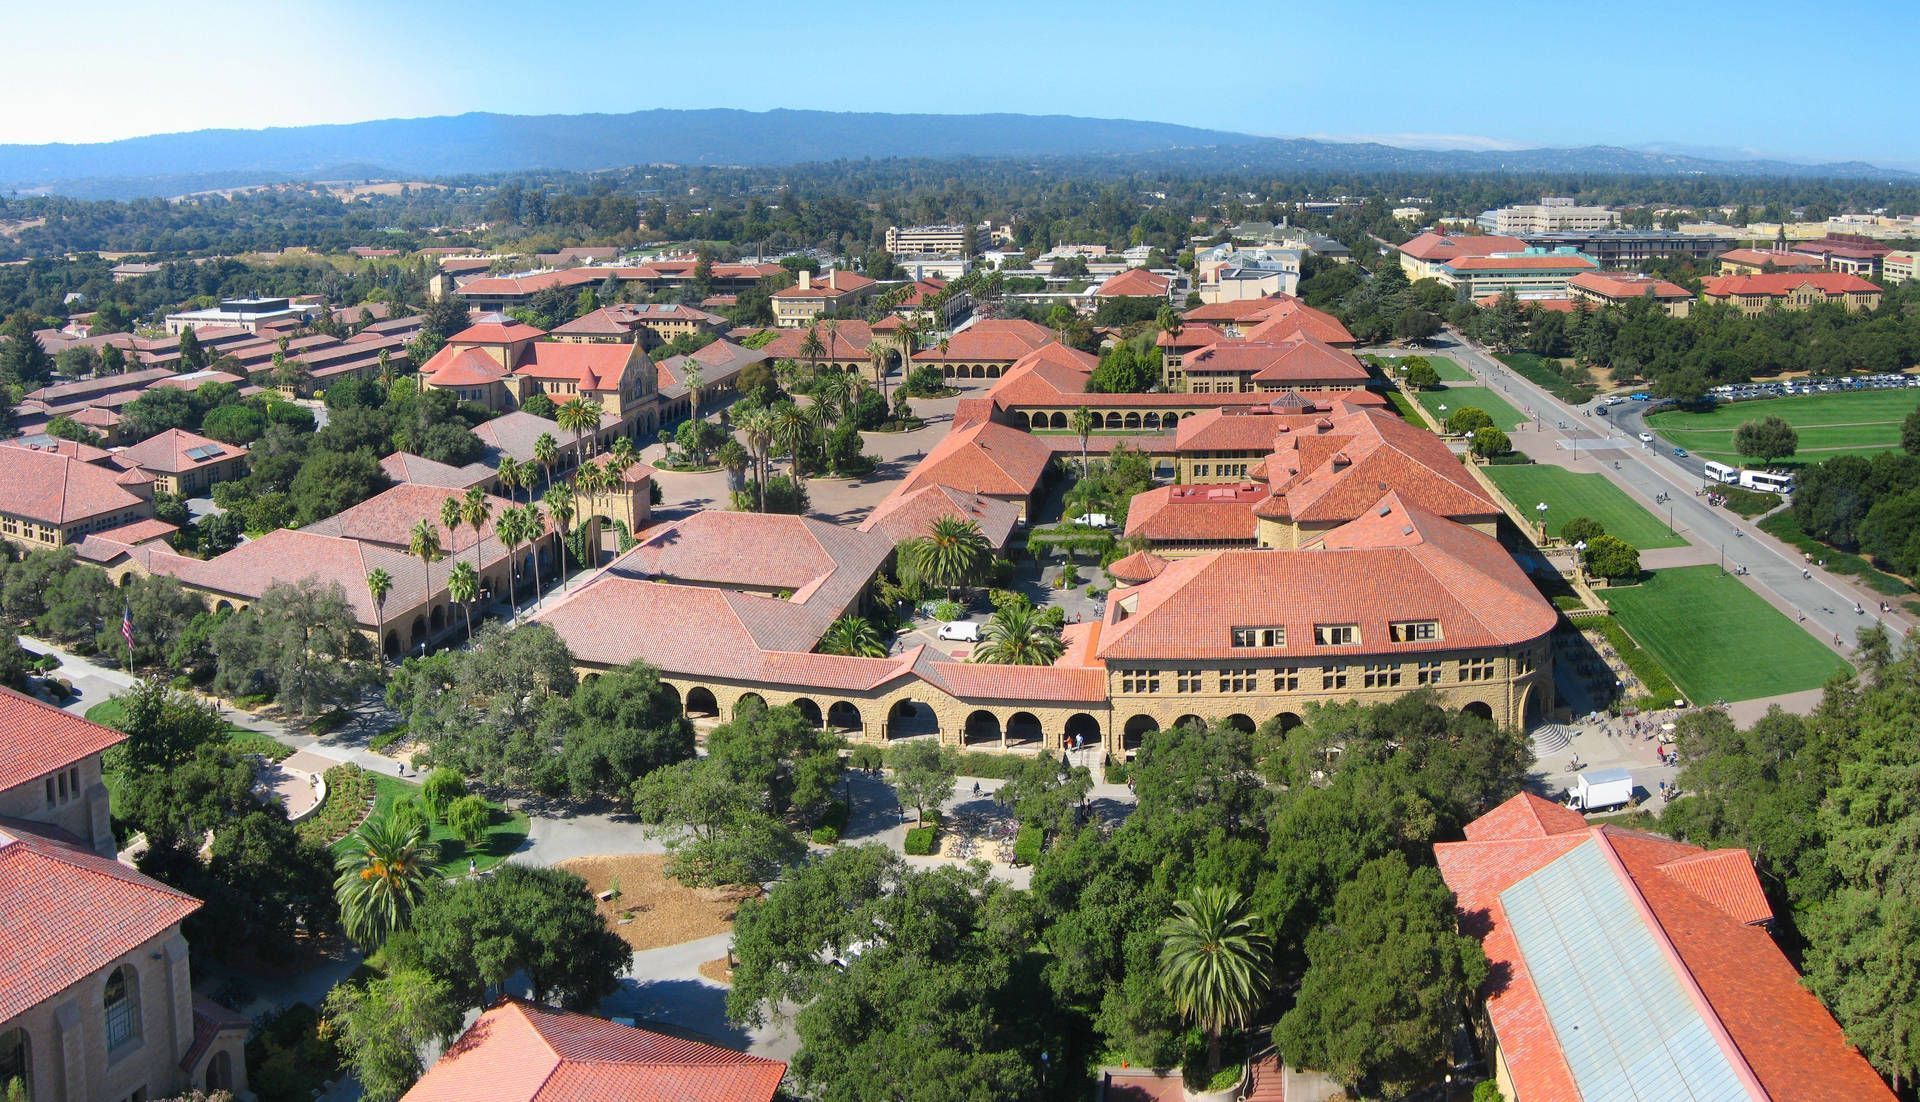 Stanford University Wallpaper